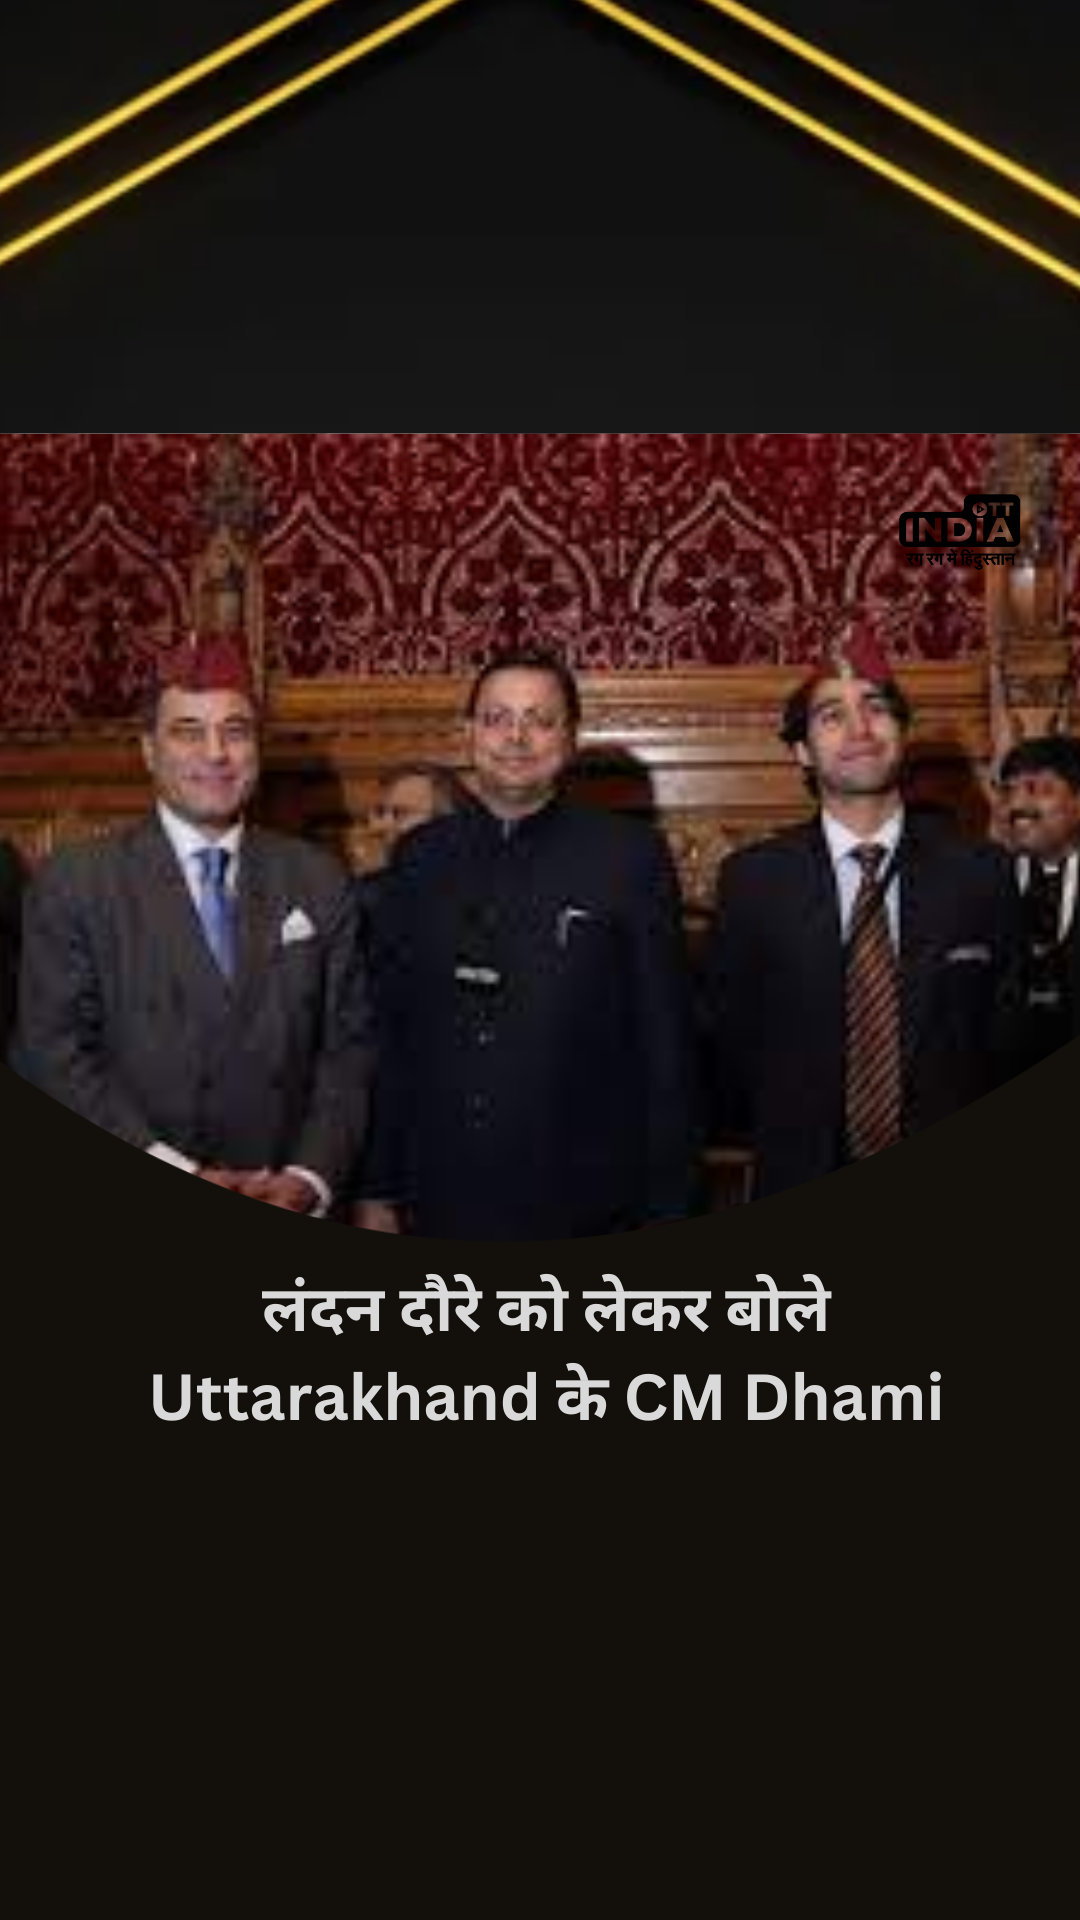 Uttarakhand CM Pushkar Singh Dhami spoke about London tour